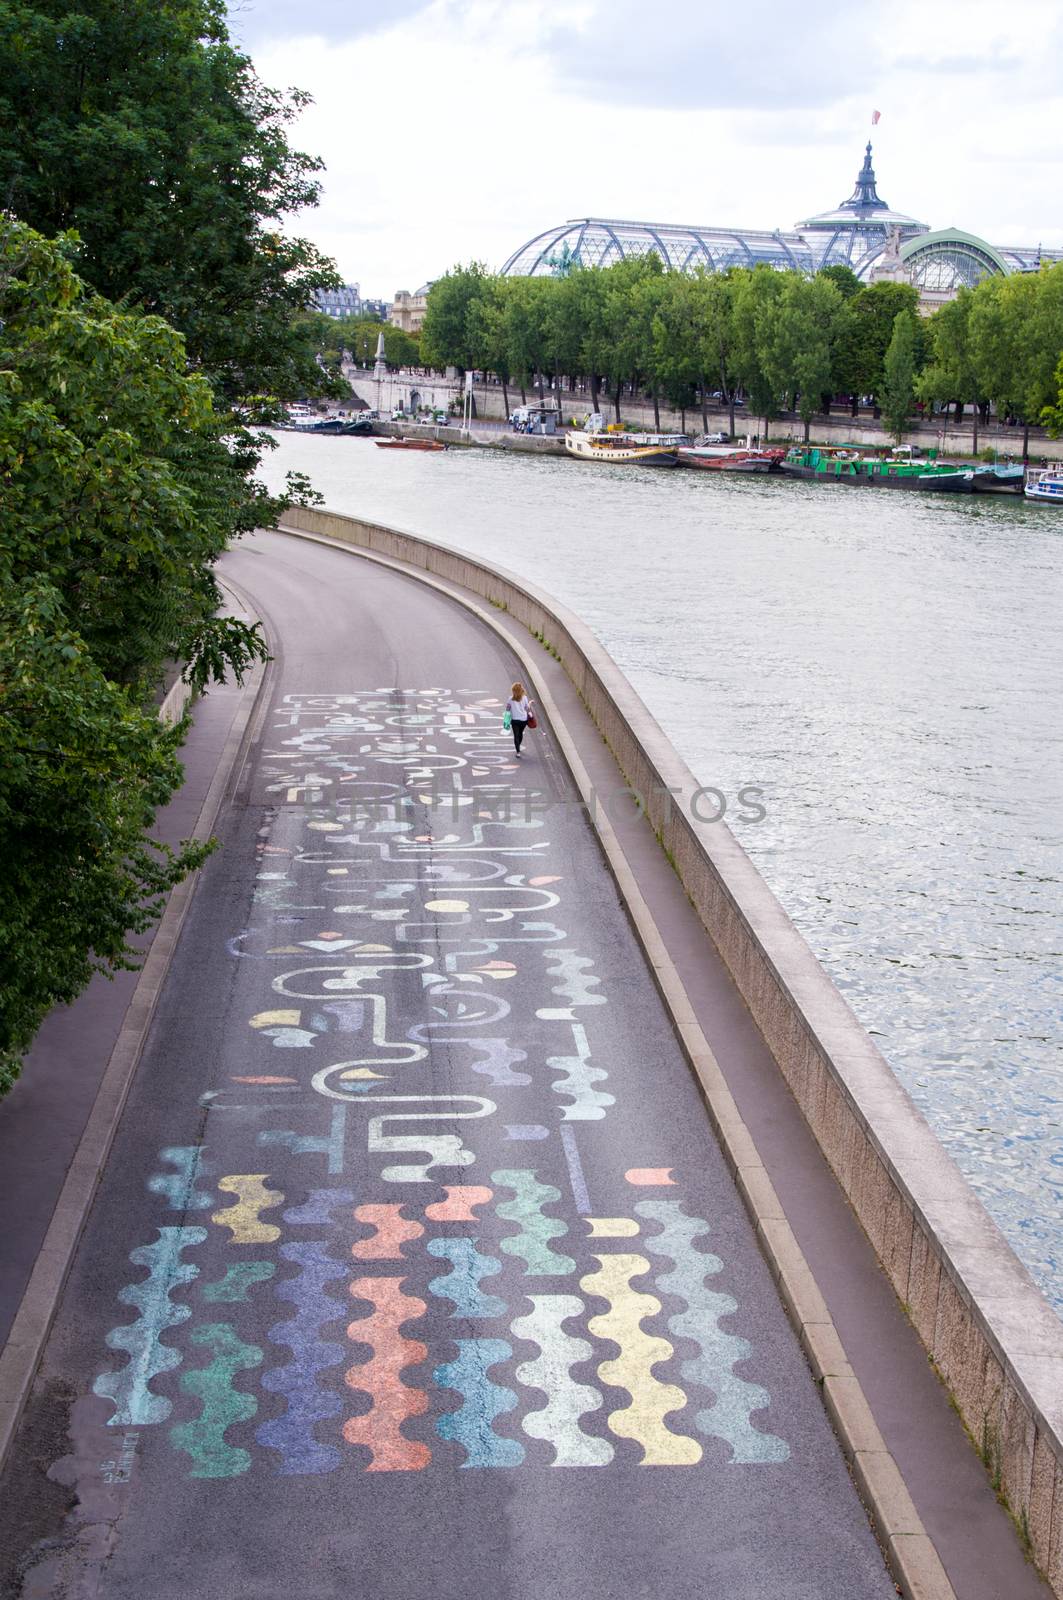 Colorful street in Paris